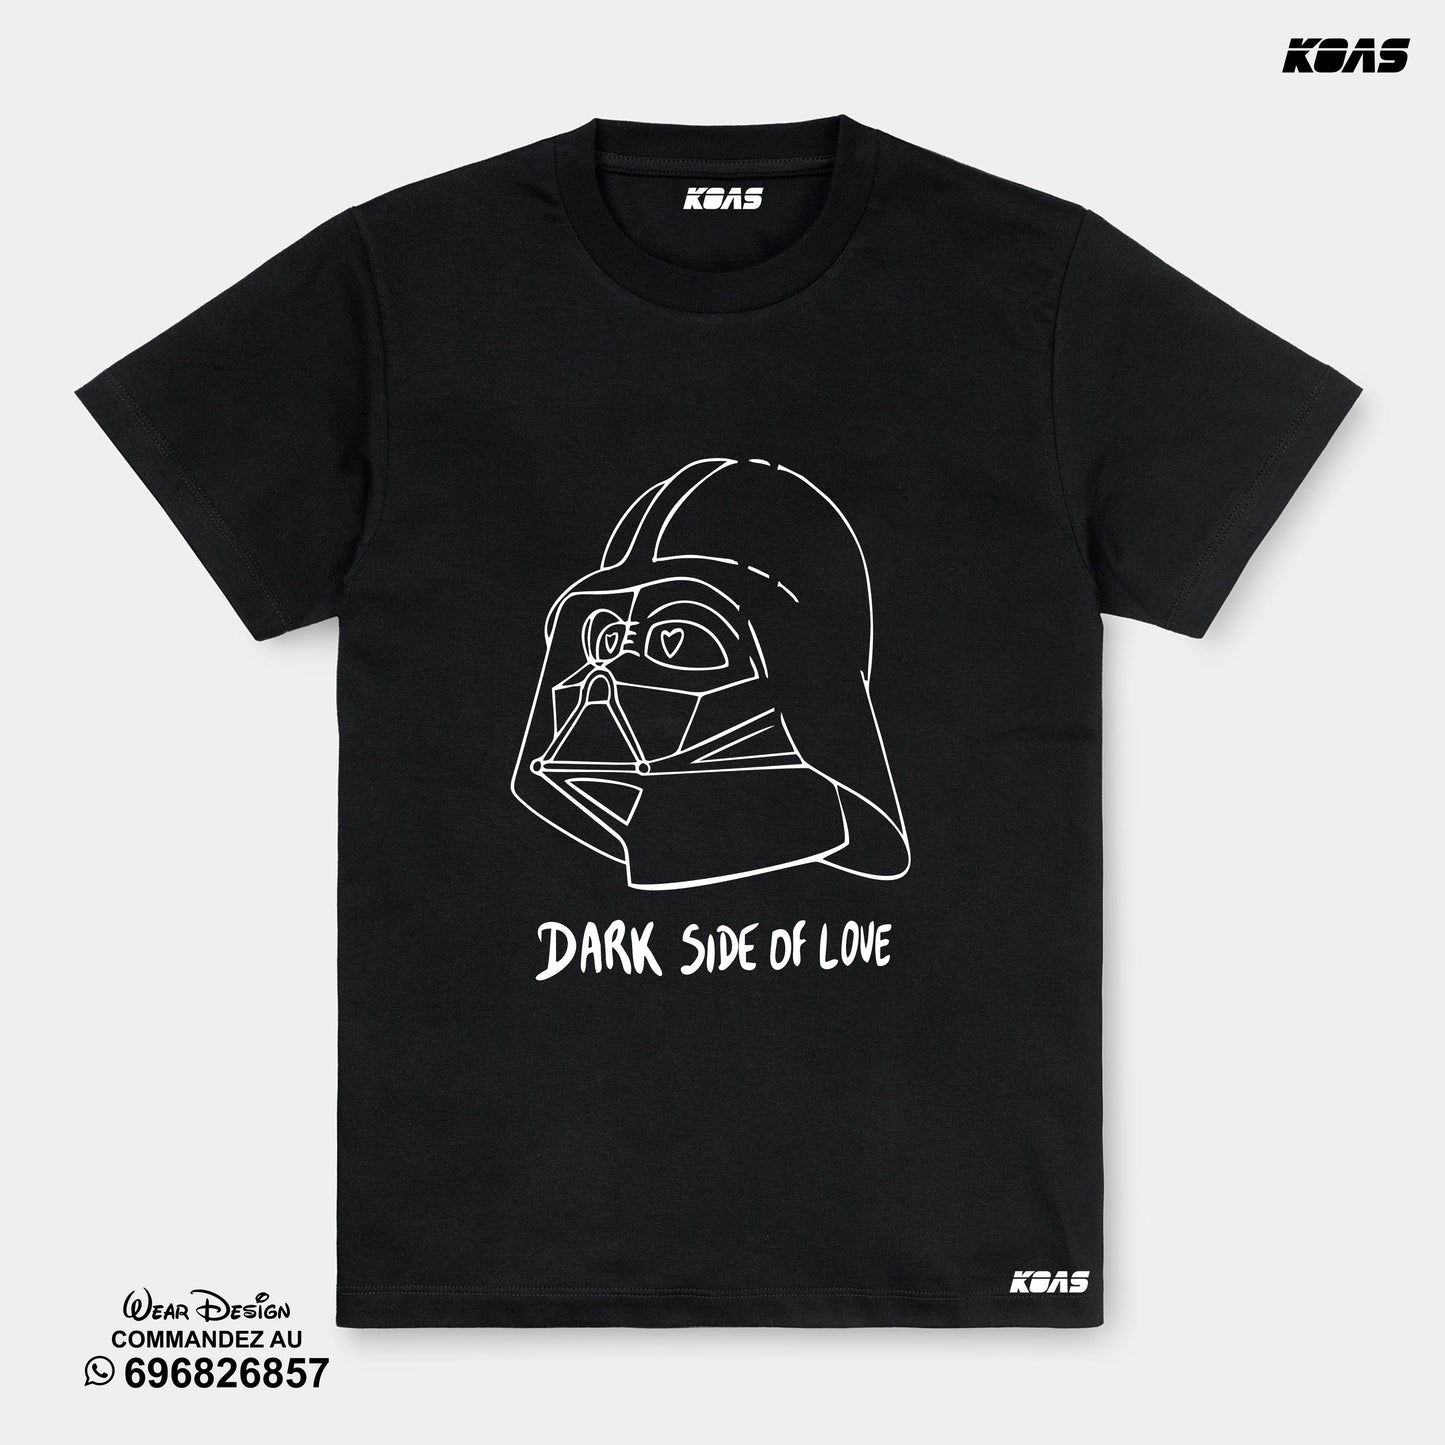 Dark side of love - Tshirt